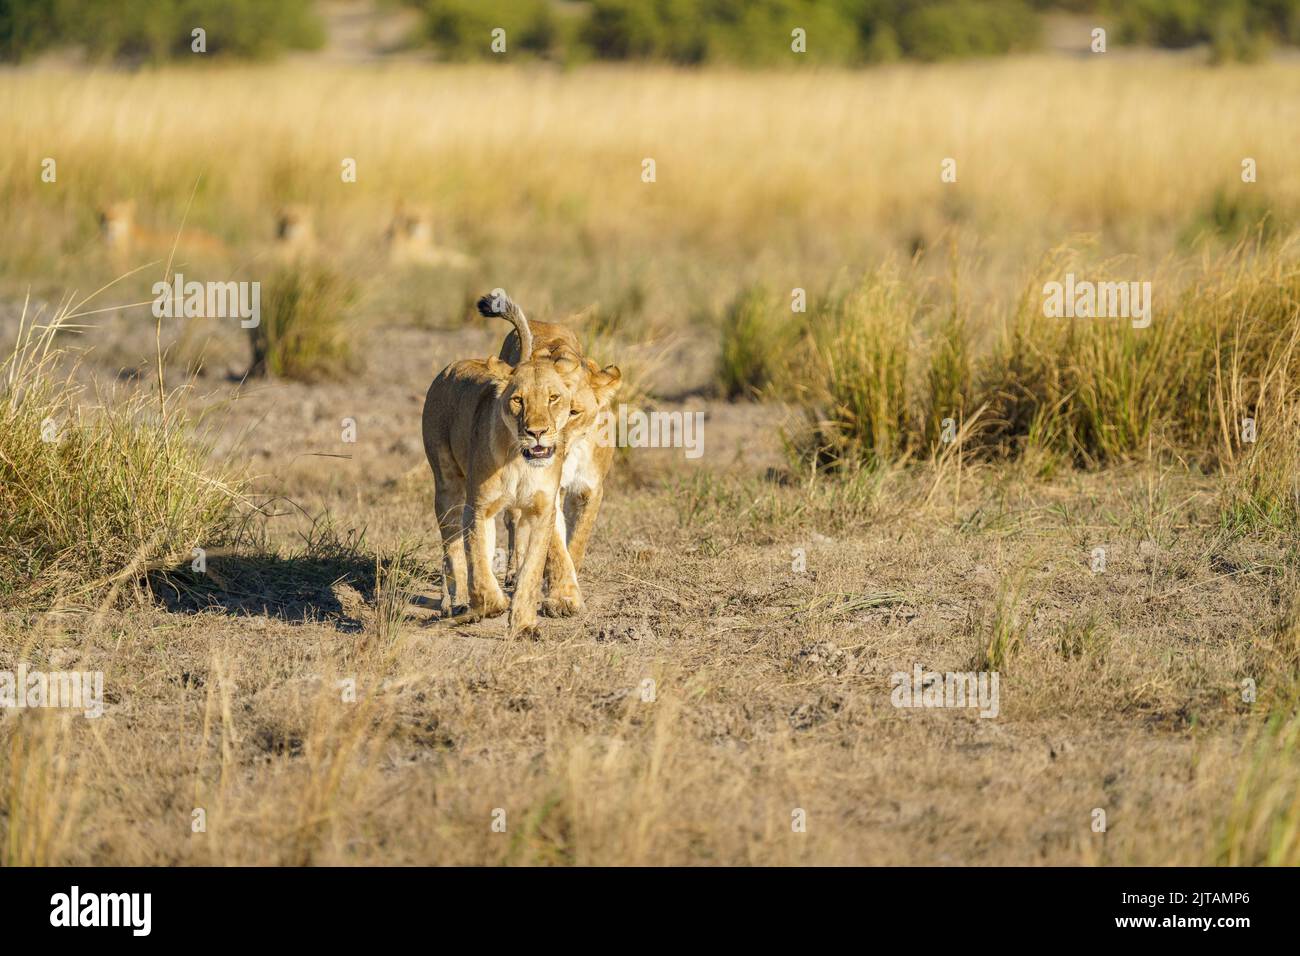 Lionesses, 2 animali adulti, camminando insieme in prateria. Parco Nazionale di Chobe, Botswana, Africa Foto Stock